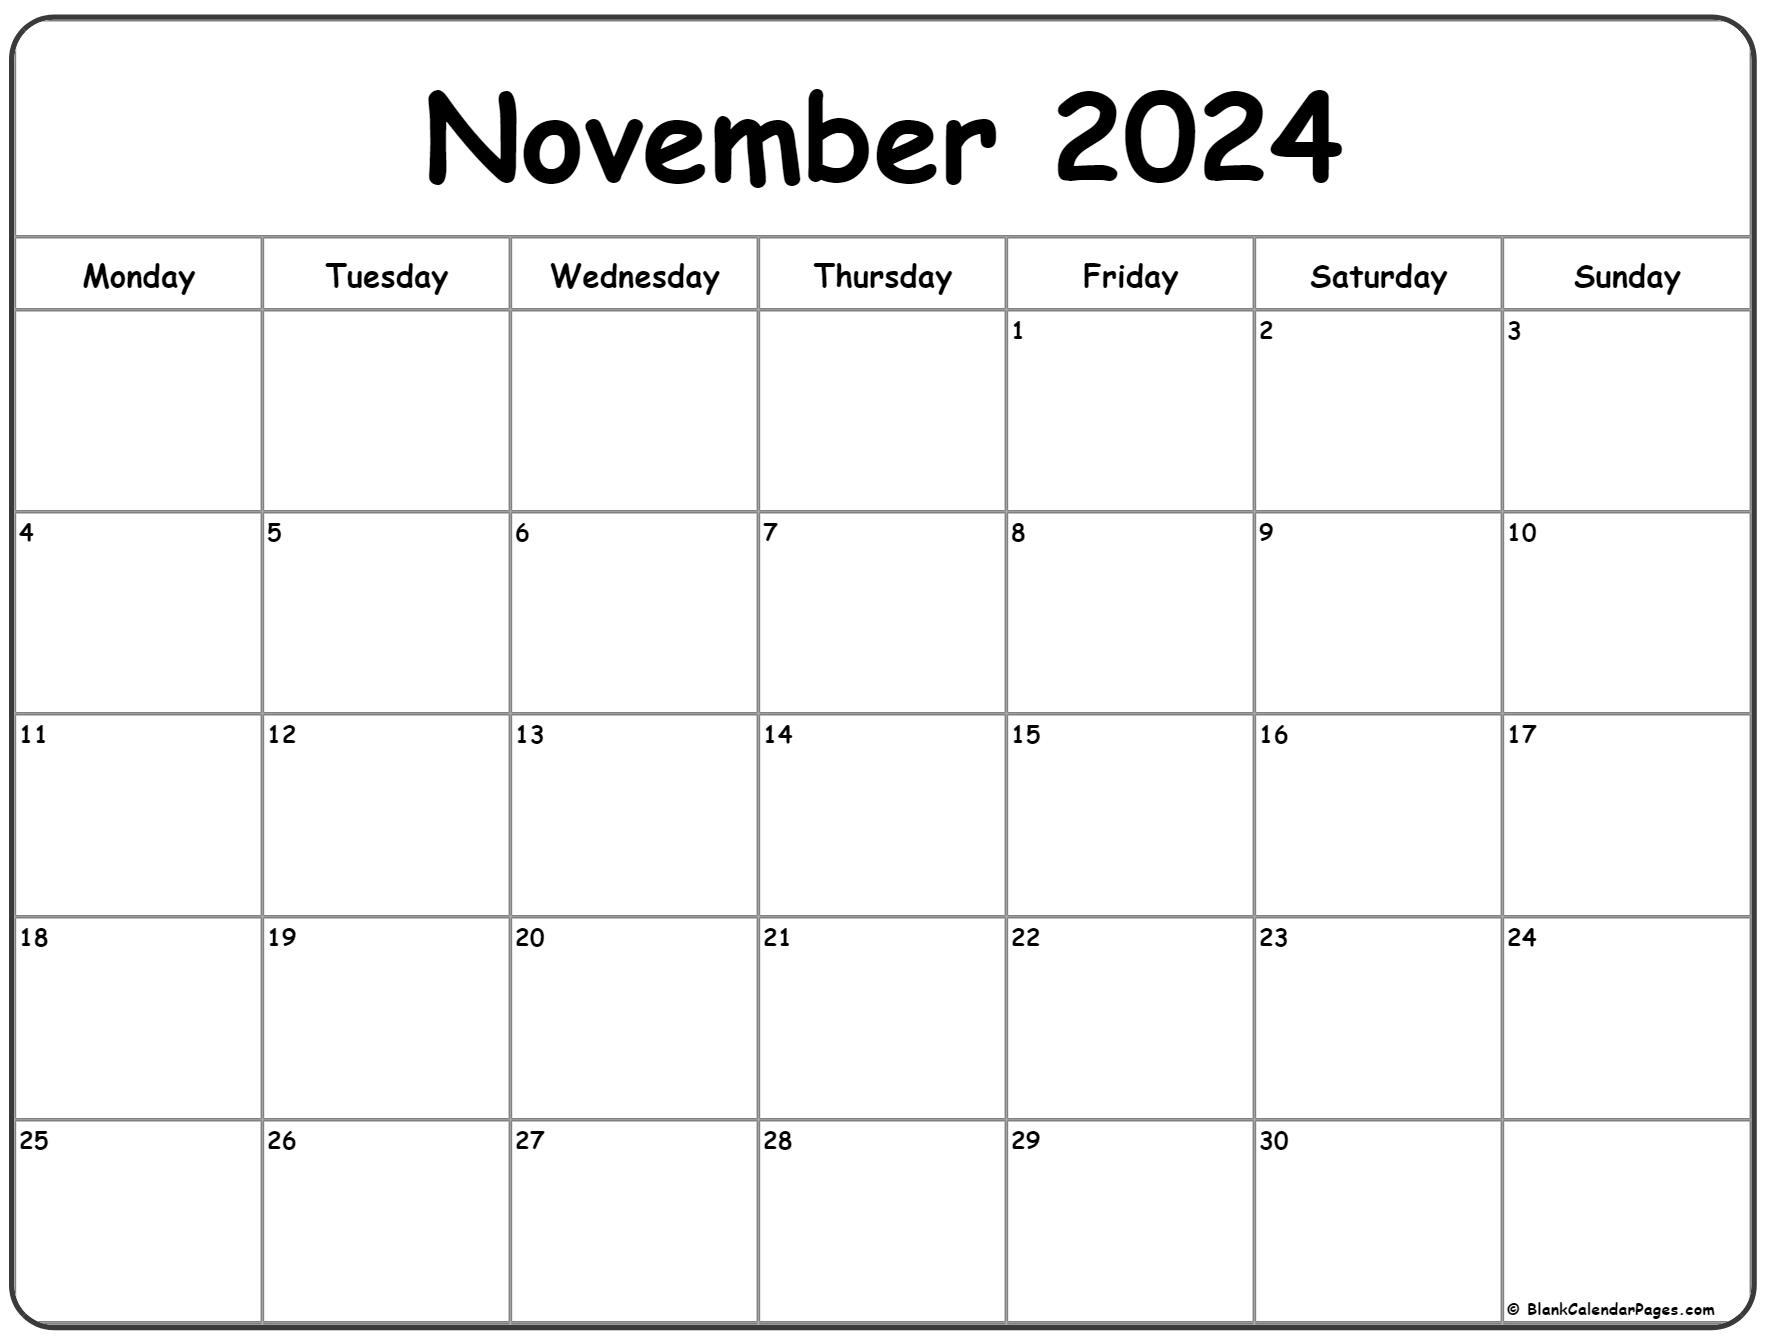 November 2024 Monday calendar. Monday to Sunday